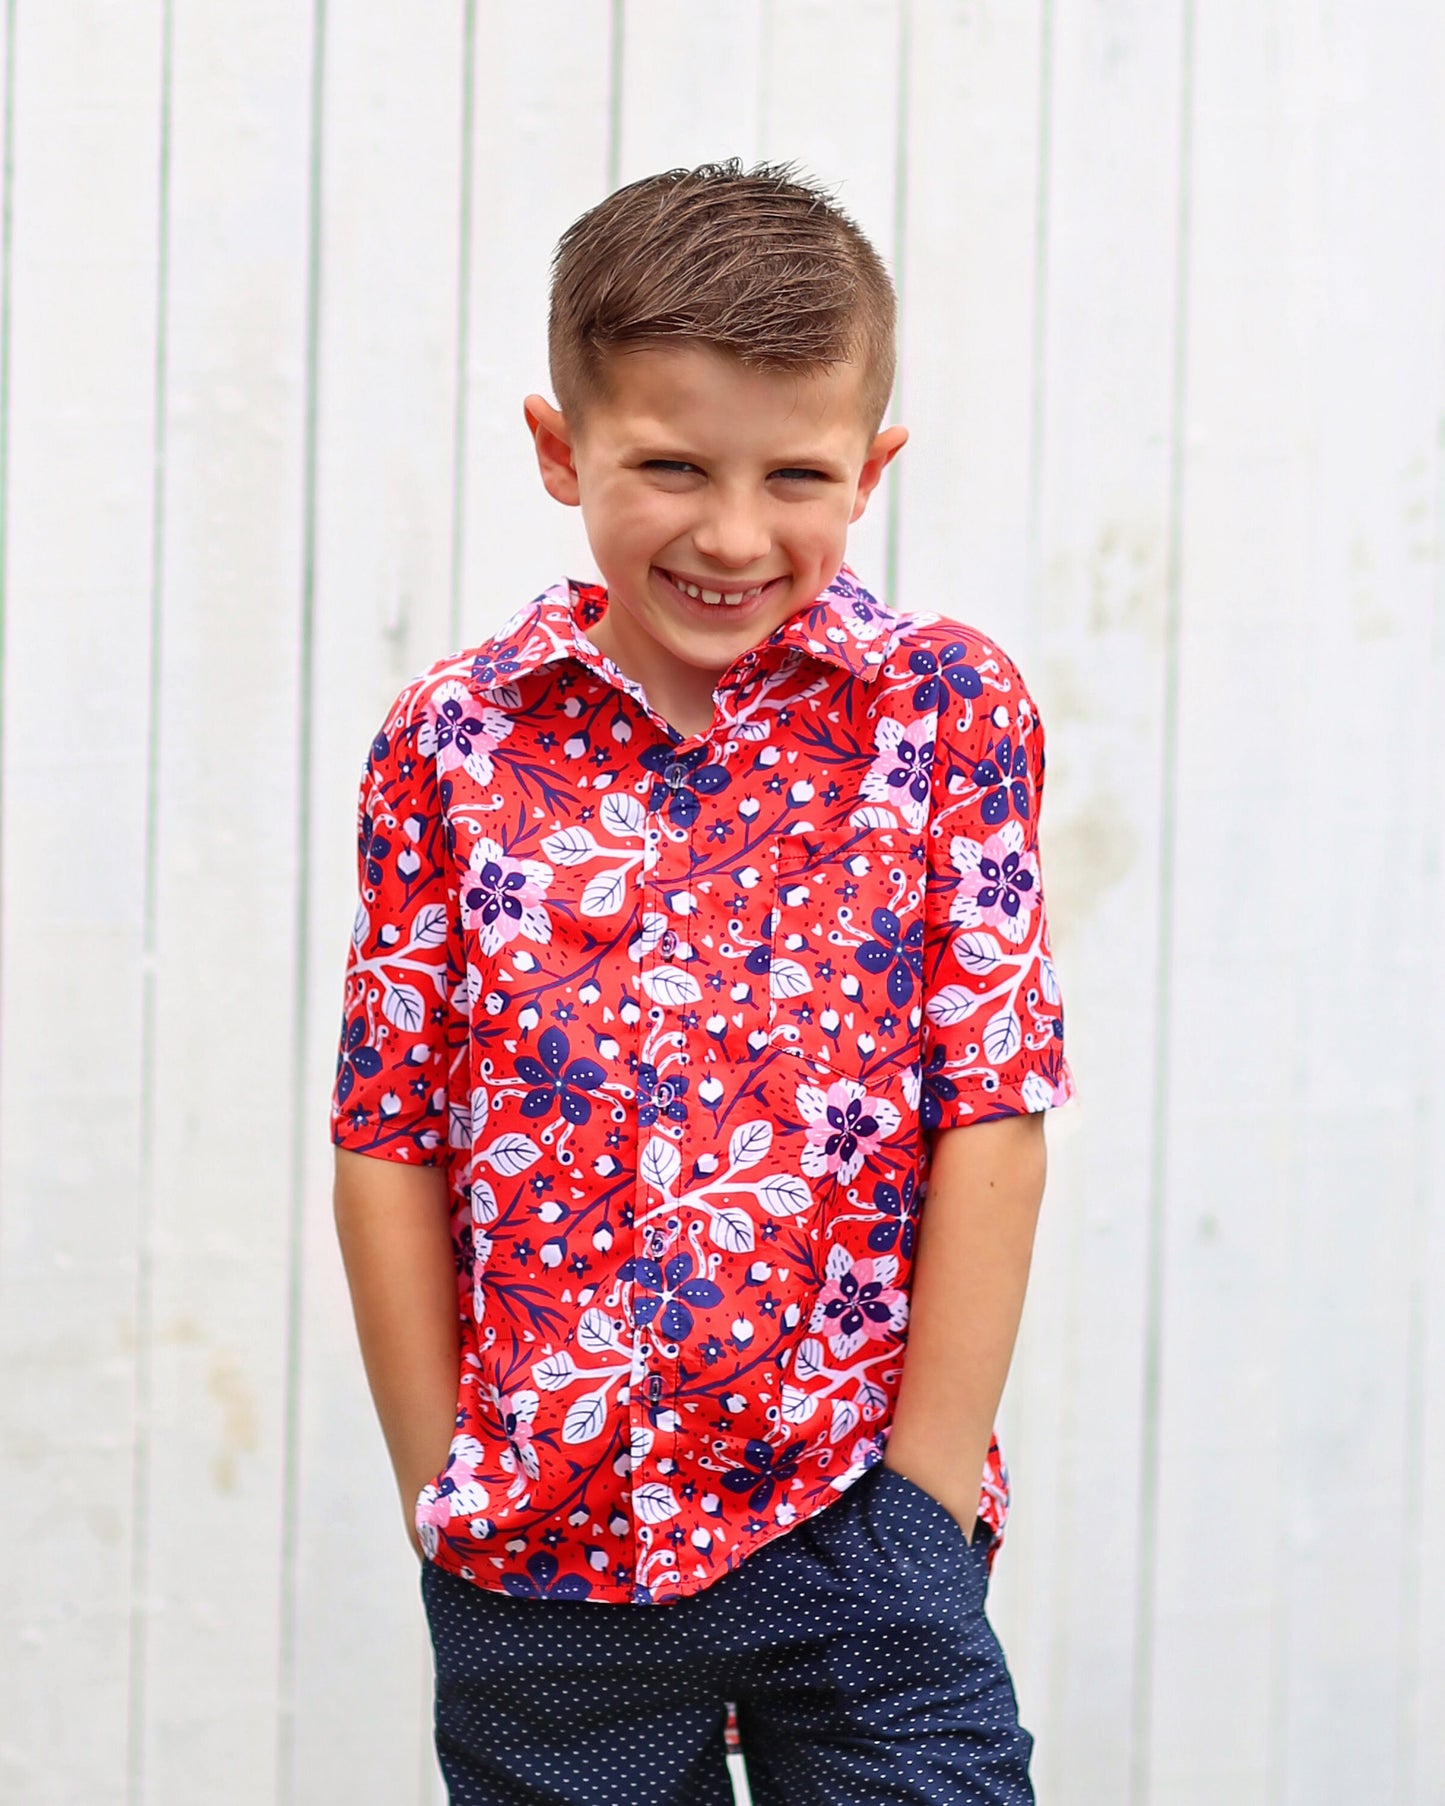 Boys Red and Blue Floral Button up Shirt - Boys Button Shirt - Boys Dress Shirt